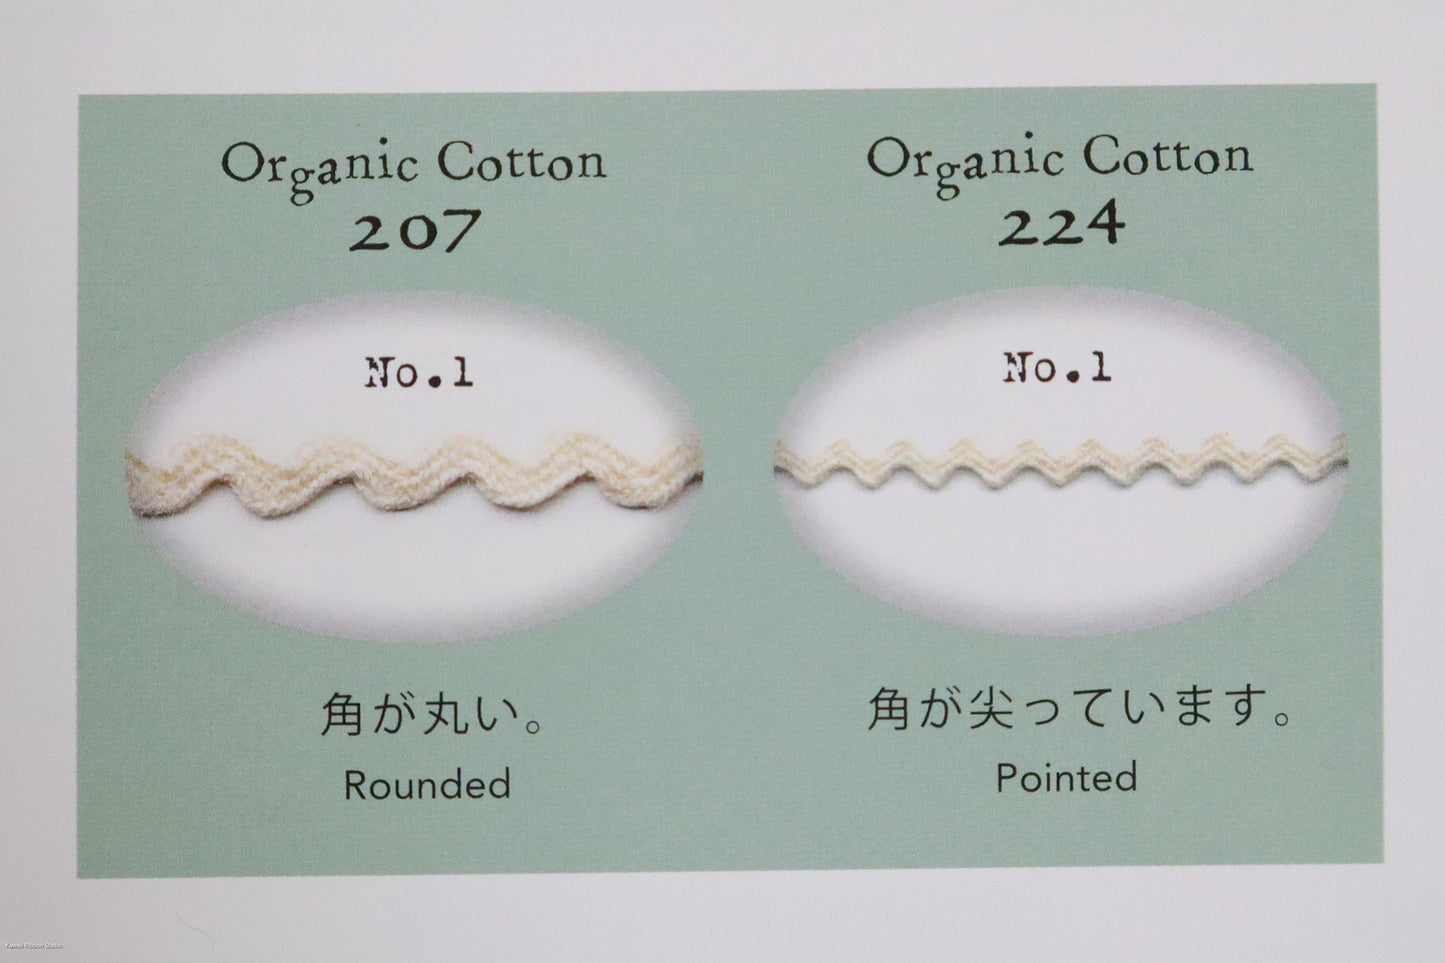 Pointy Ric rac trim in 100% organic cotton